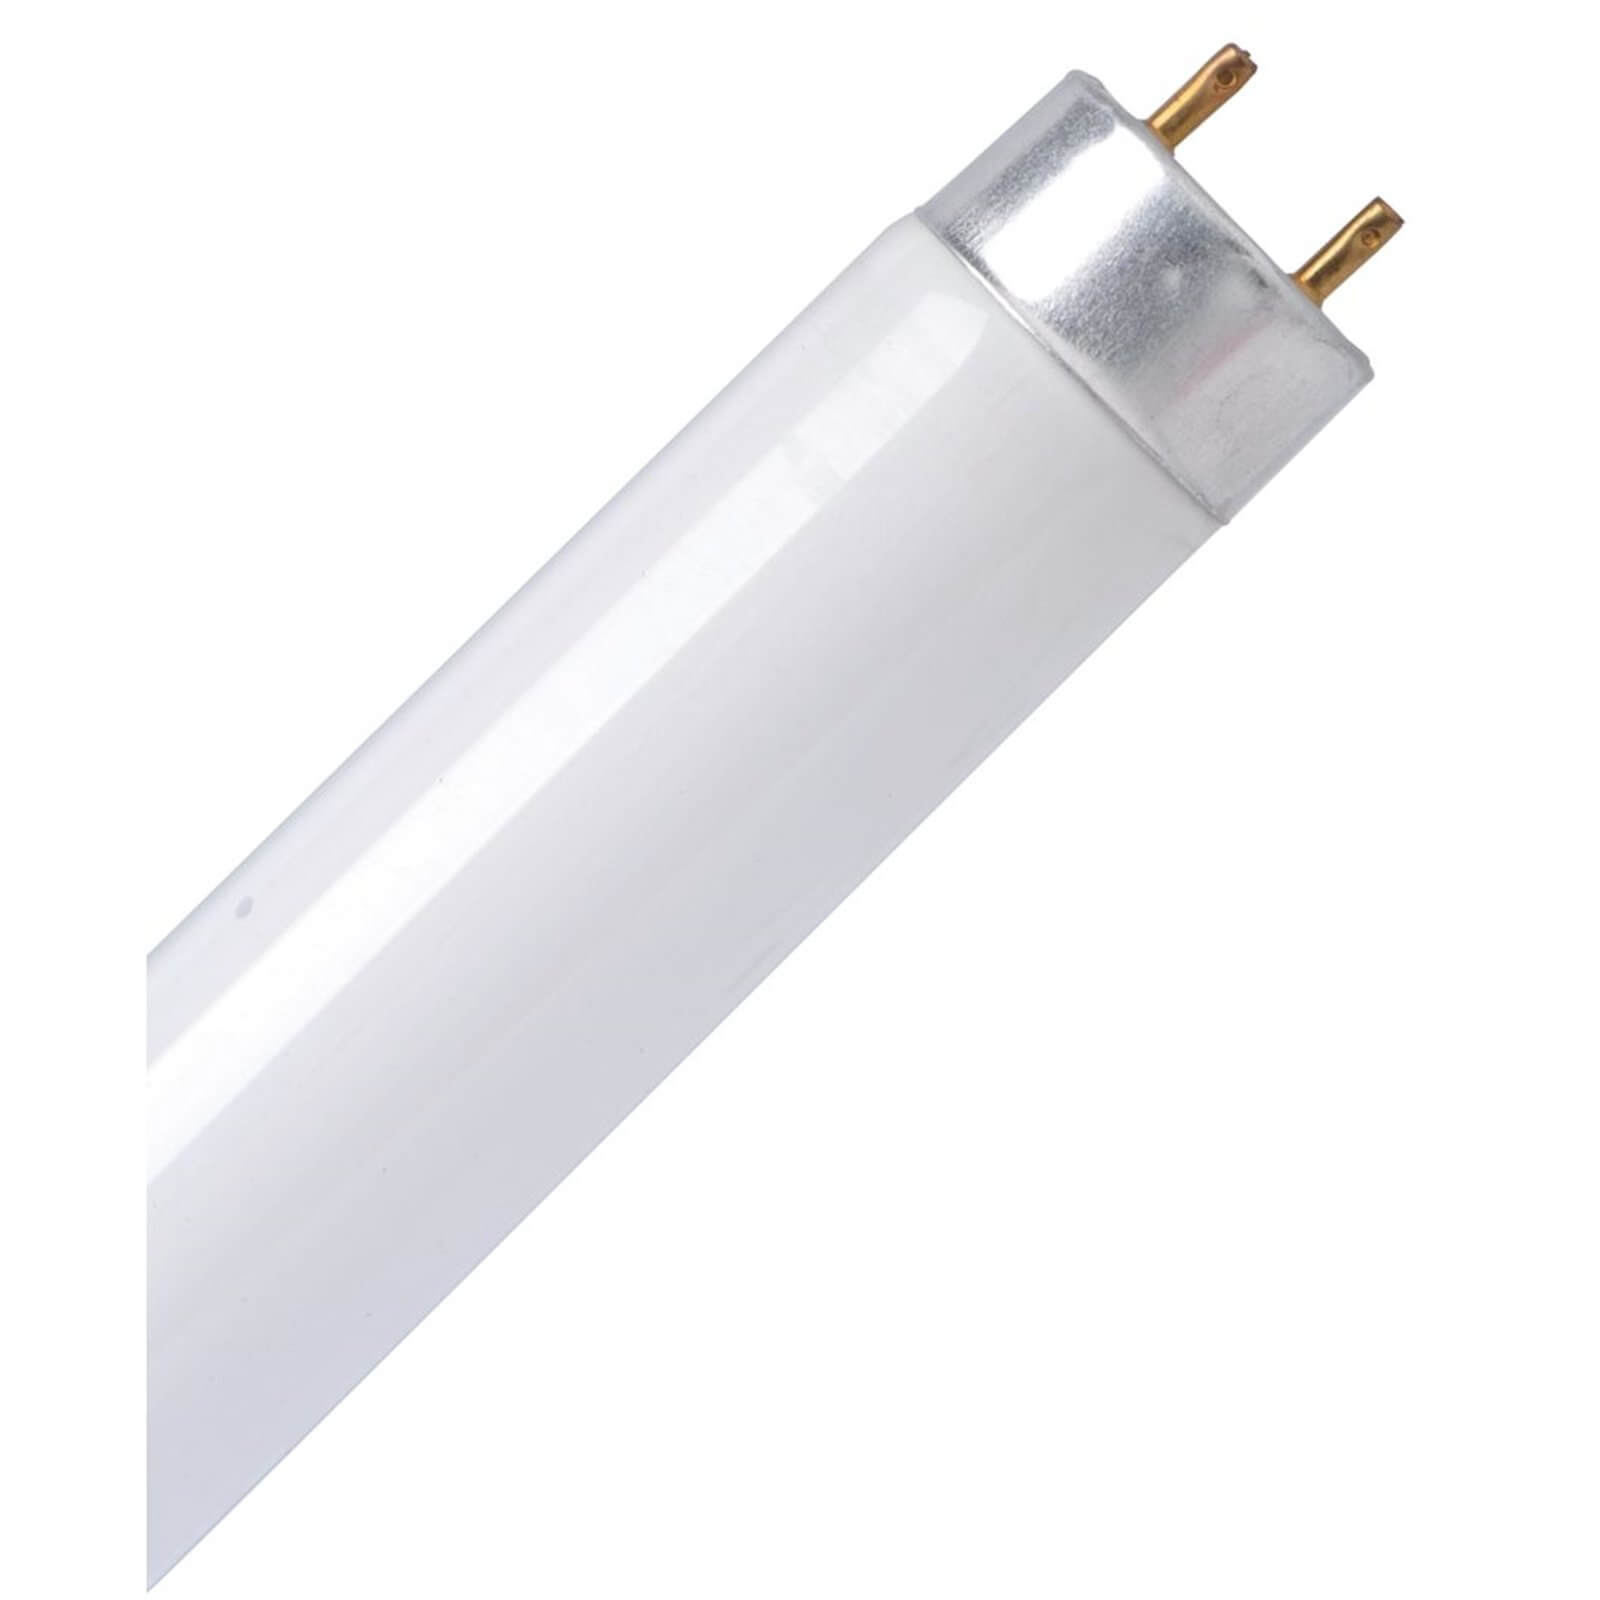 Photo of Energy Saver -cfl- Tube Cool White 1.5 58w Light Bulb